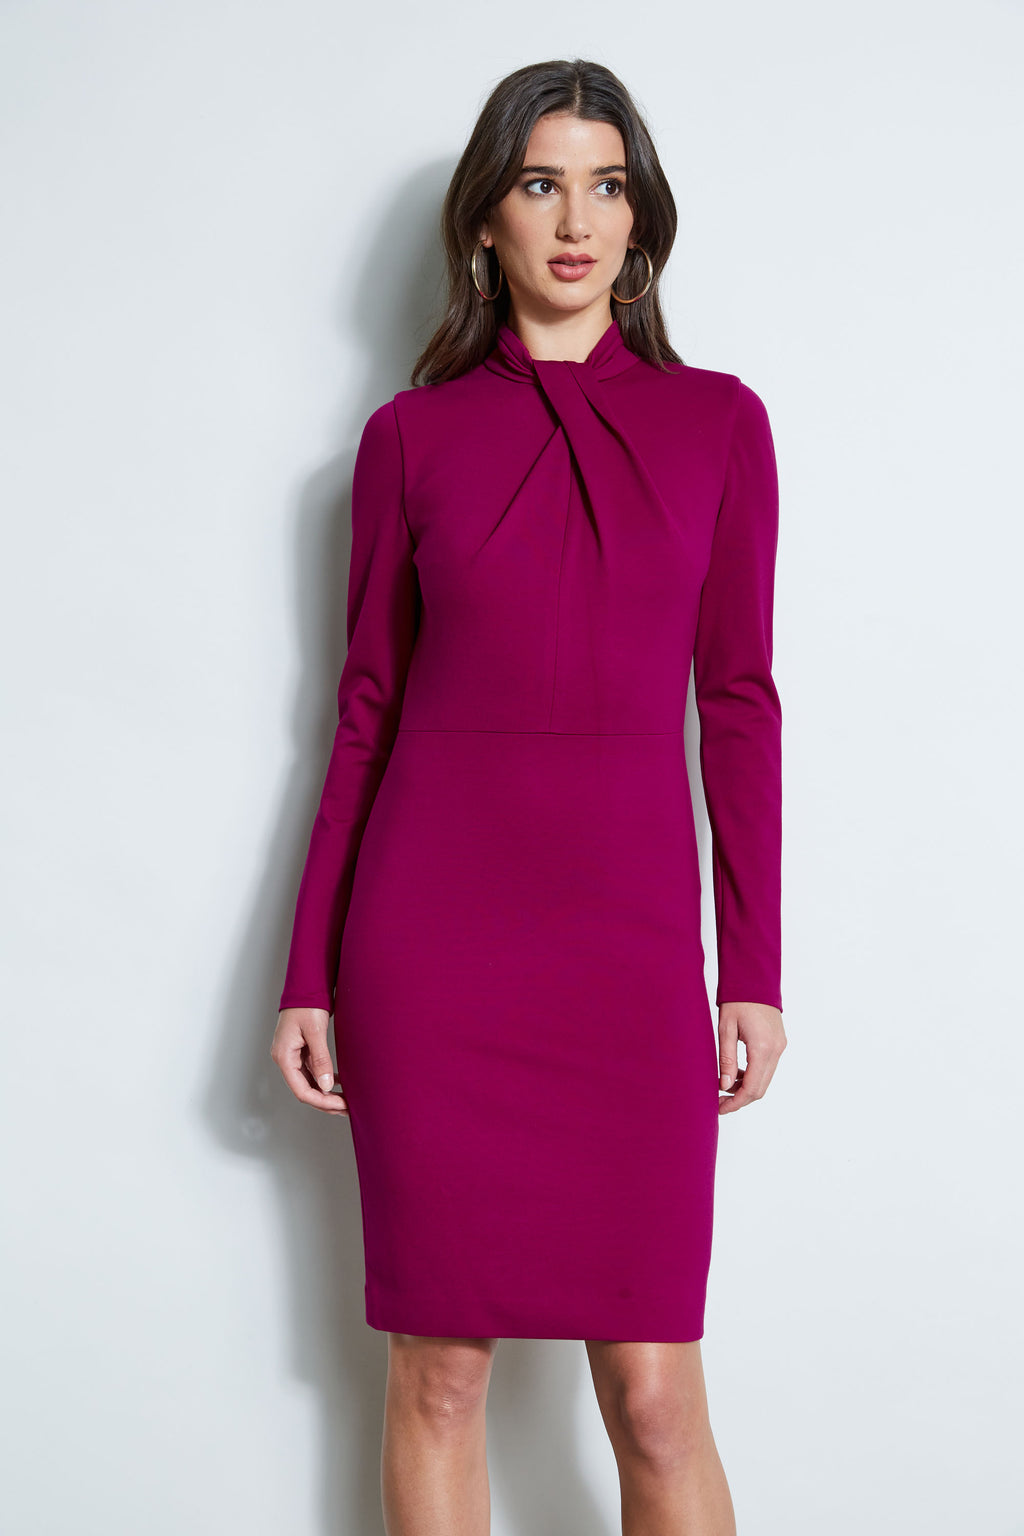 Elie Tahari Twist-Accented Lace Dress size 4